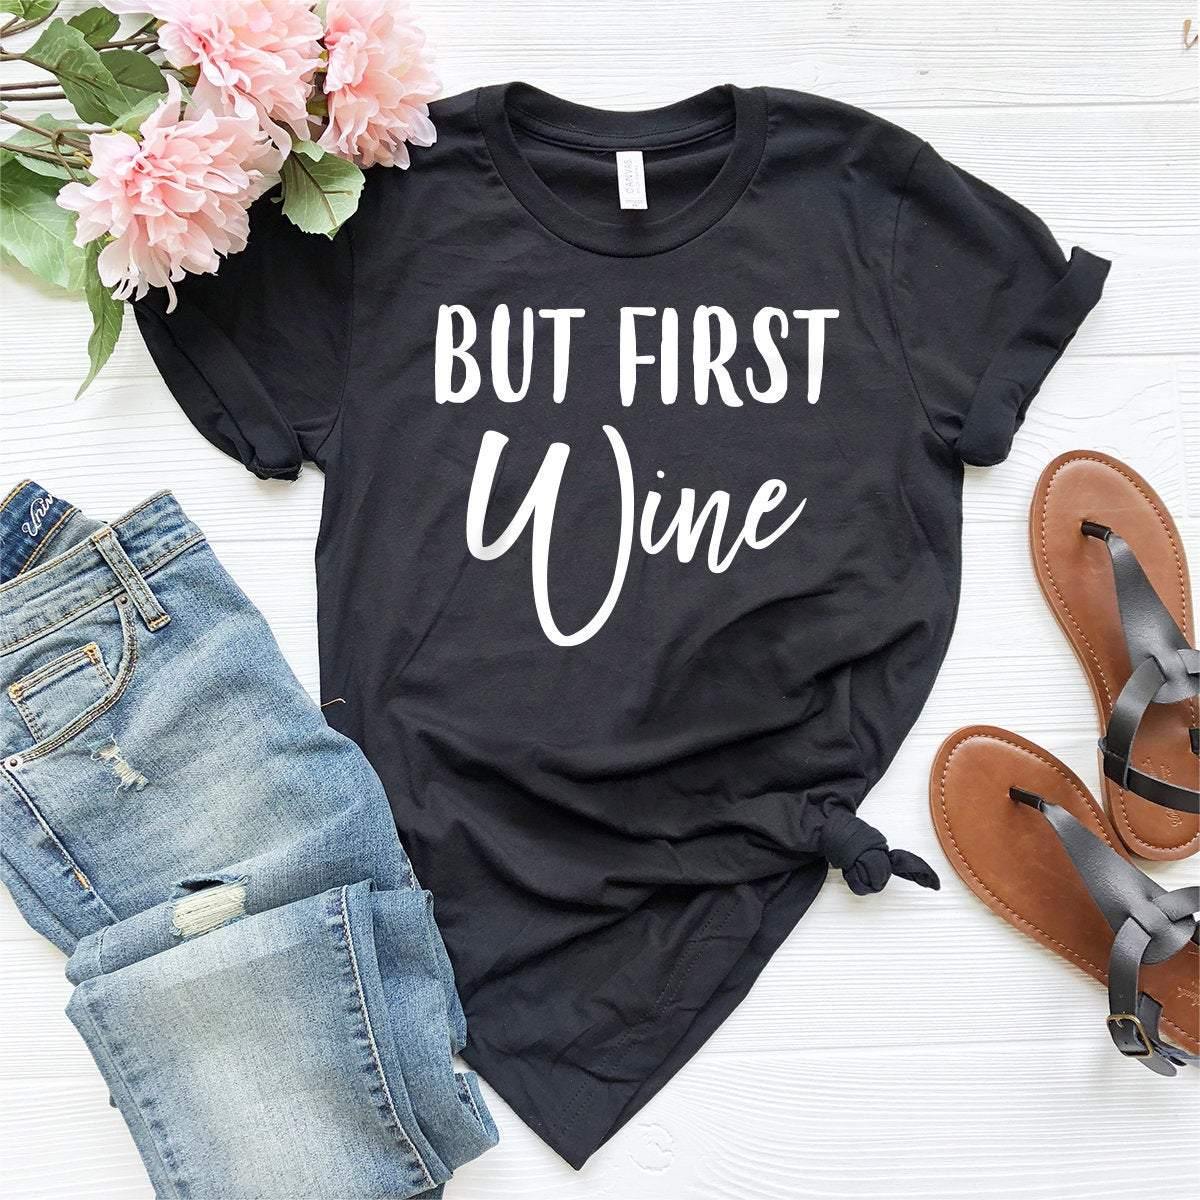 But First Wine Shirt, Wine T-Shirt, Wine Lover Gift, Funny Wine Shirt, Wine Drinking Shirt, Wine Lover Tee, Wine Gift, Wine Shirt, Wine Tee - Fastdeliverytees.com